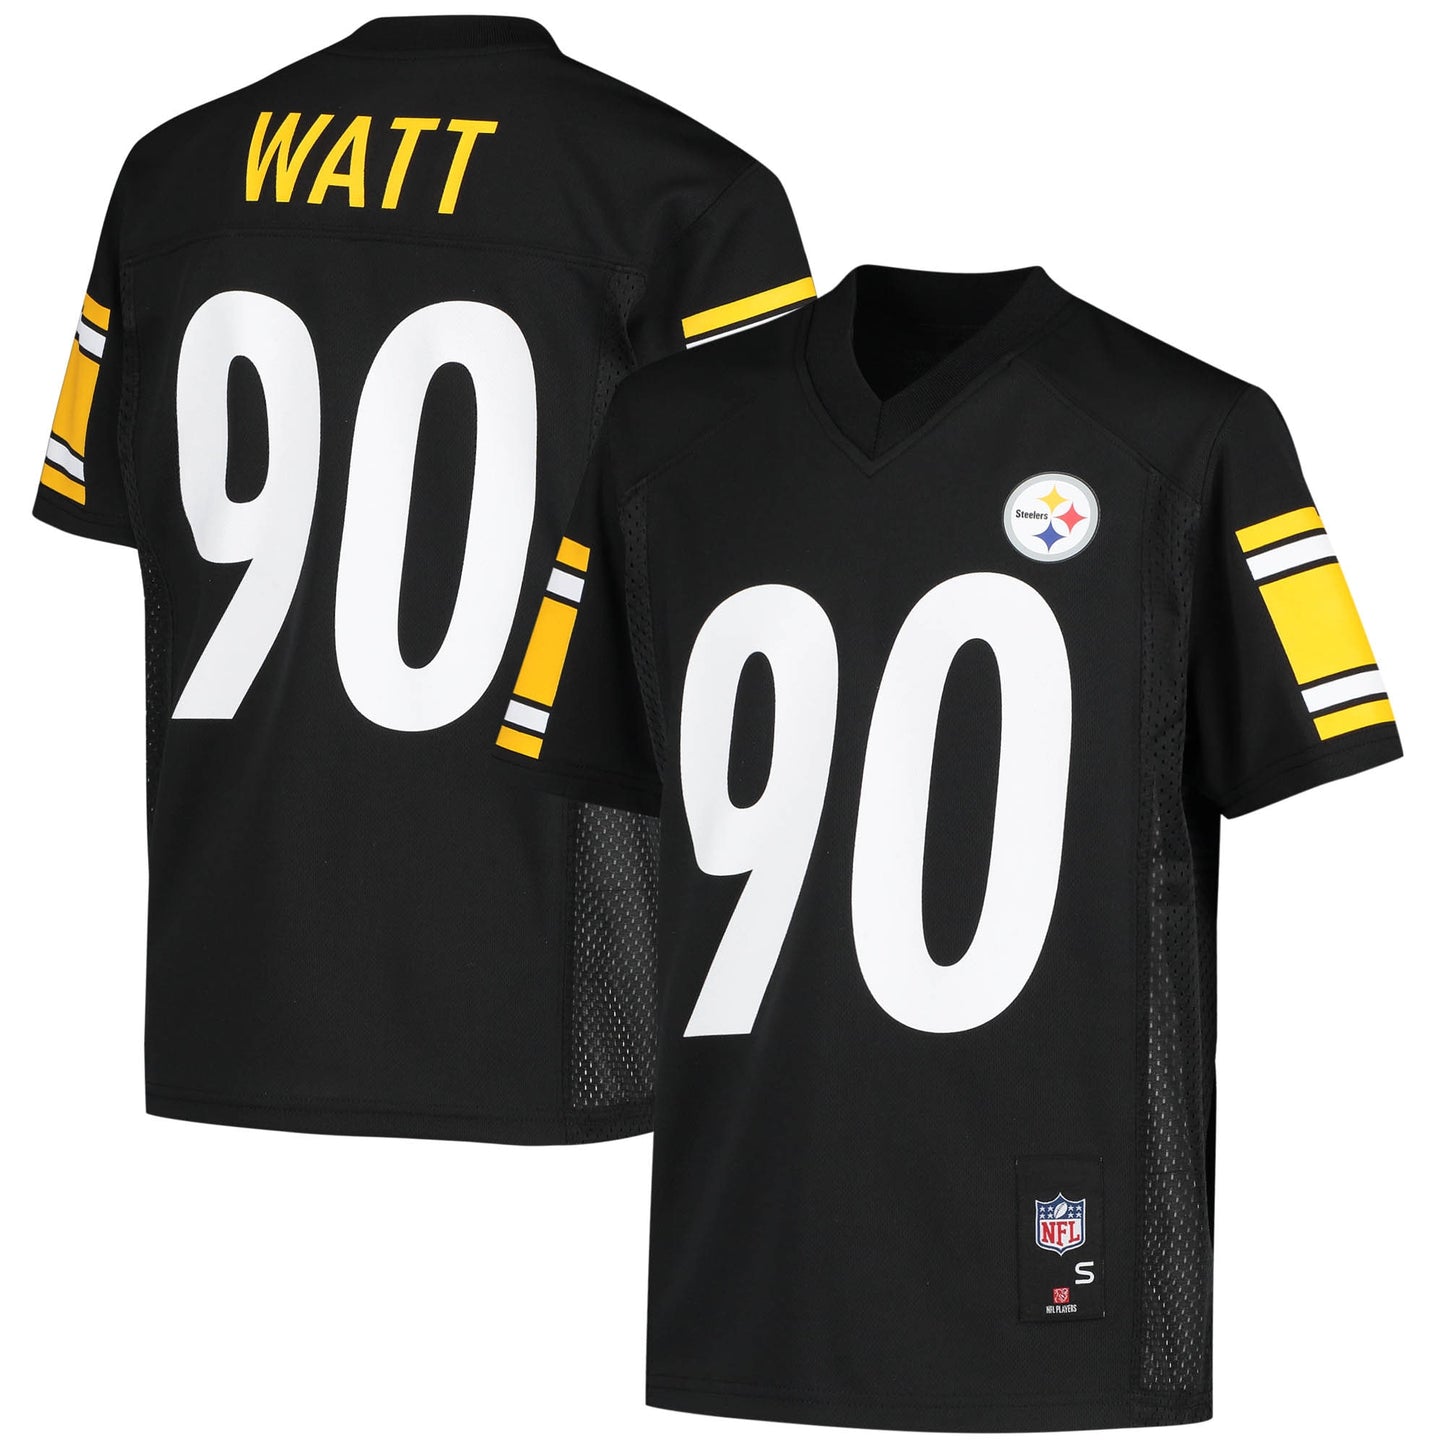 T.J. Watt Pittsburgh Steelers Youth Replica Player Jersey - Black